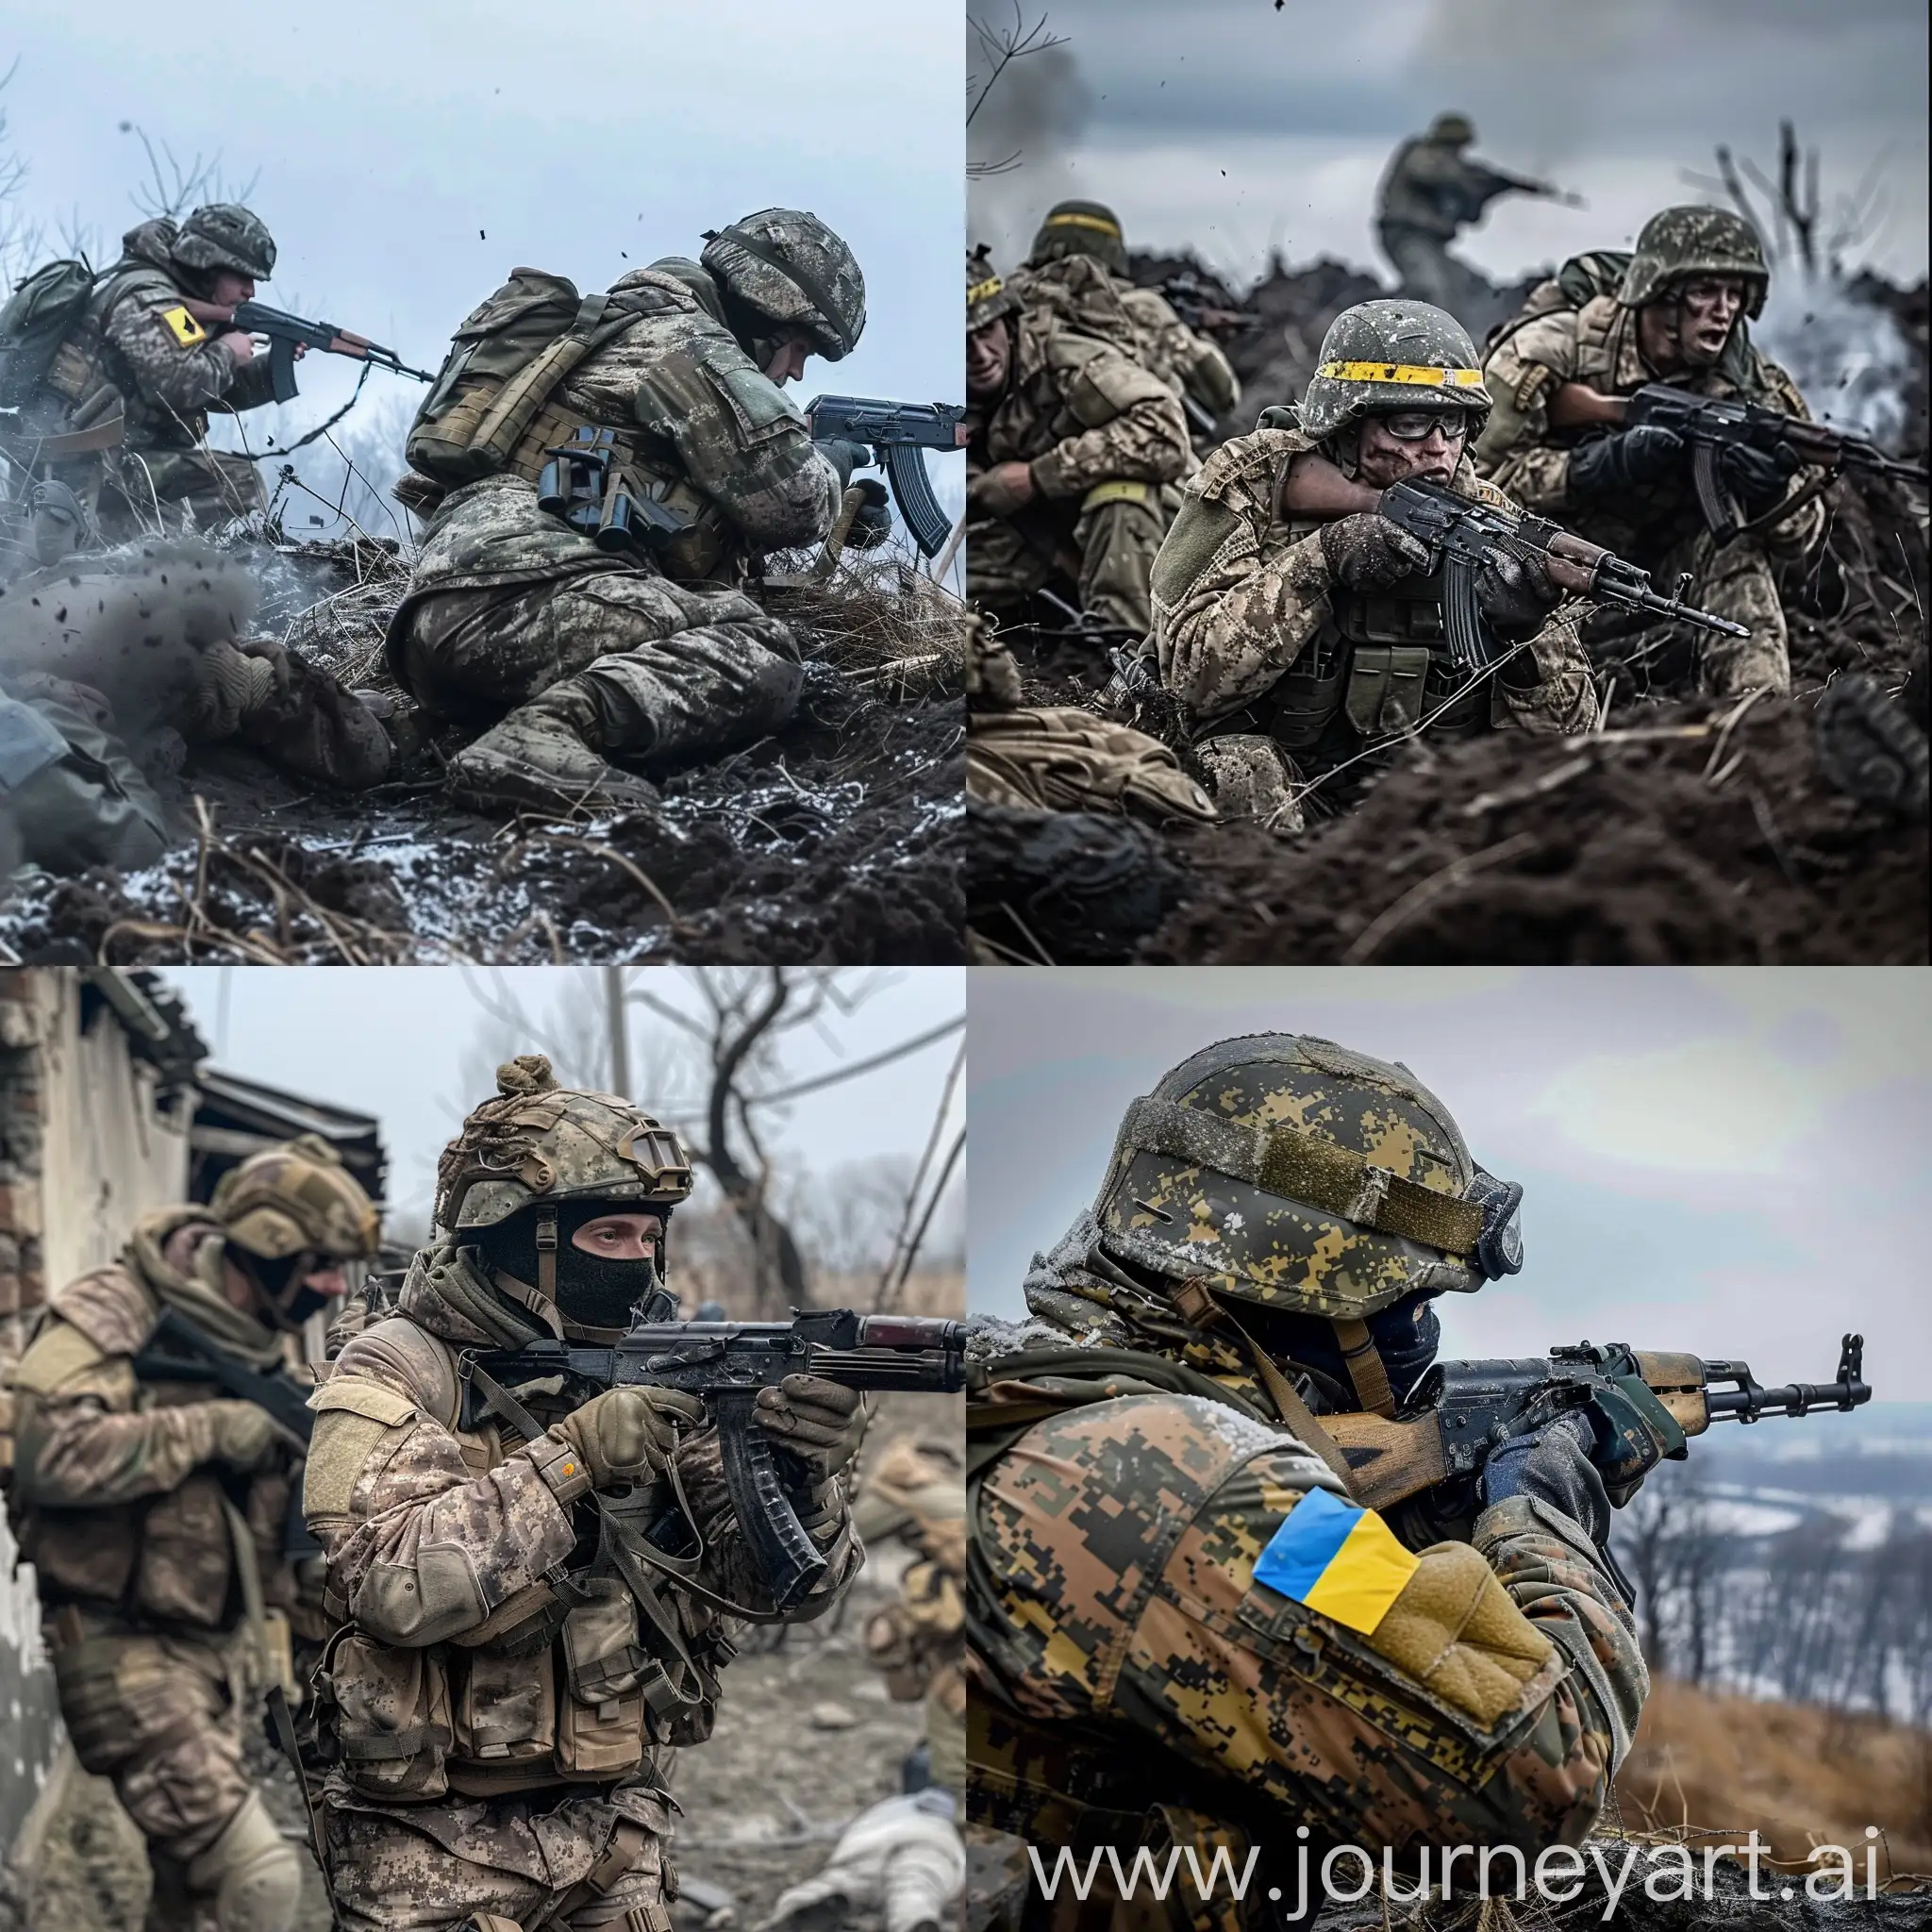 Intense-Combat-Scene-in-Ukraine-Soldiers-Engaged-in-Warfare